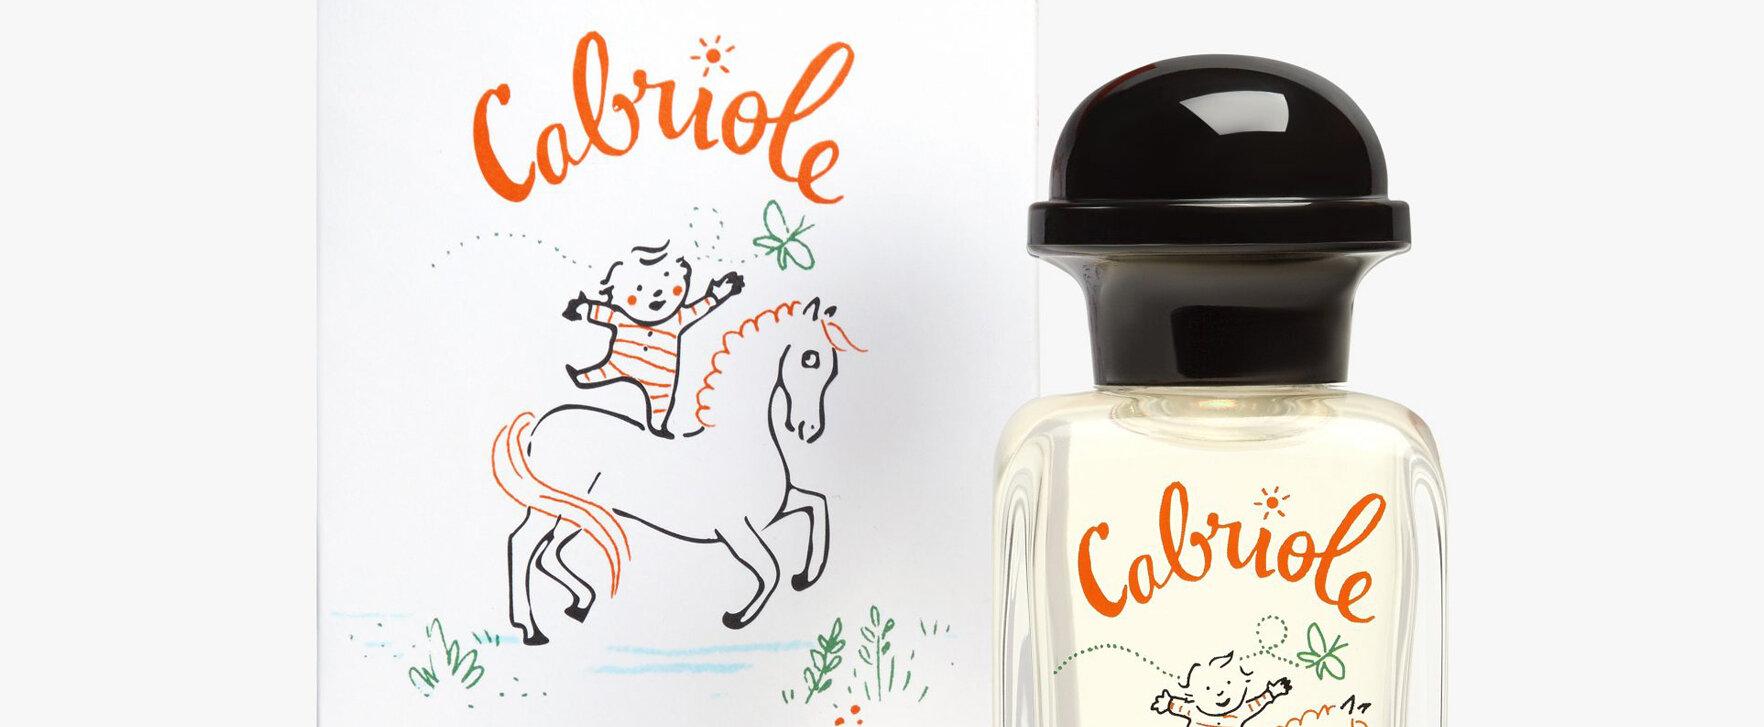 „Cabriole“ - Hermès bringt Parfum für Kinder